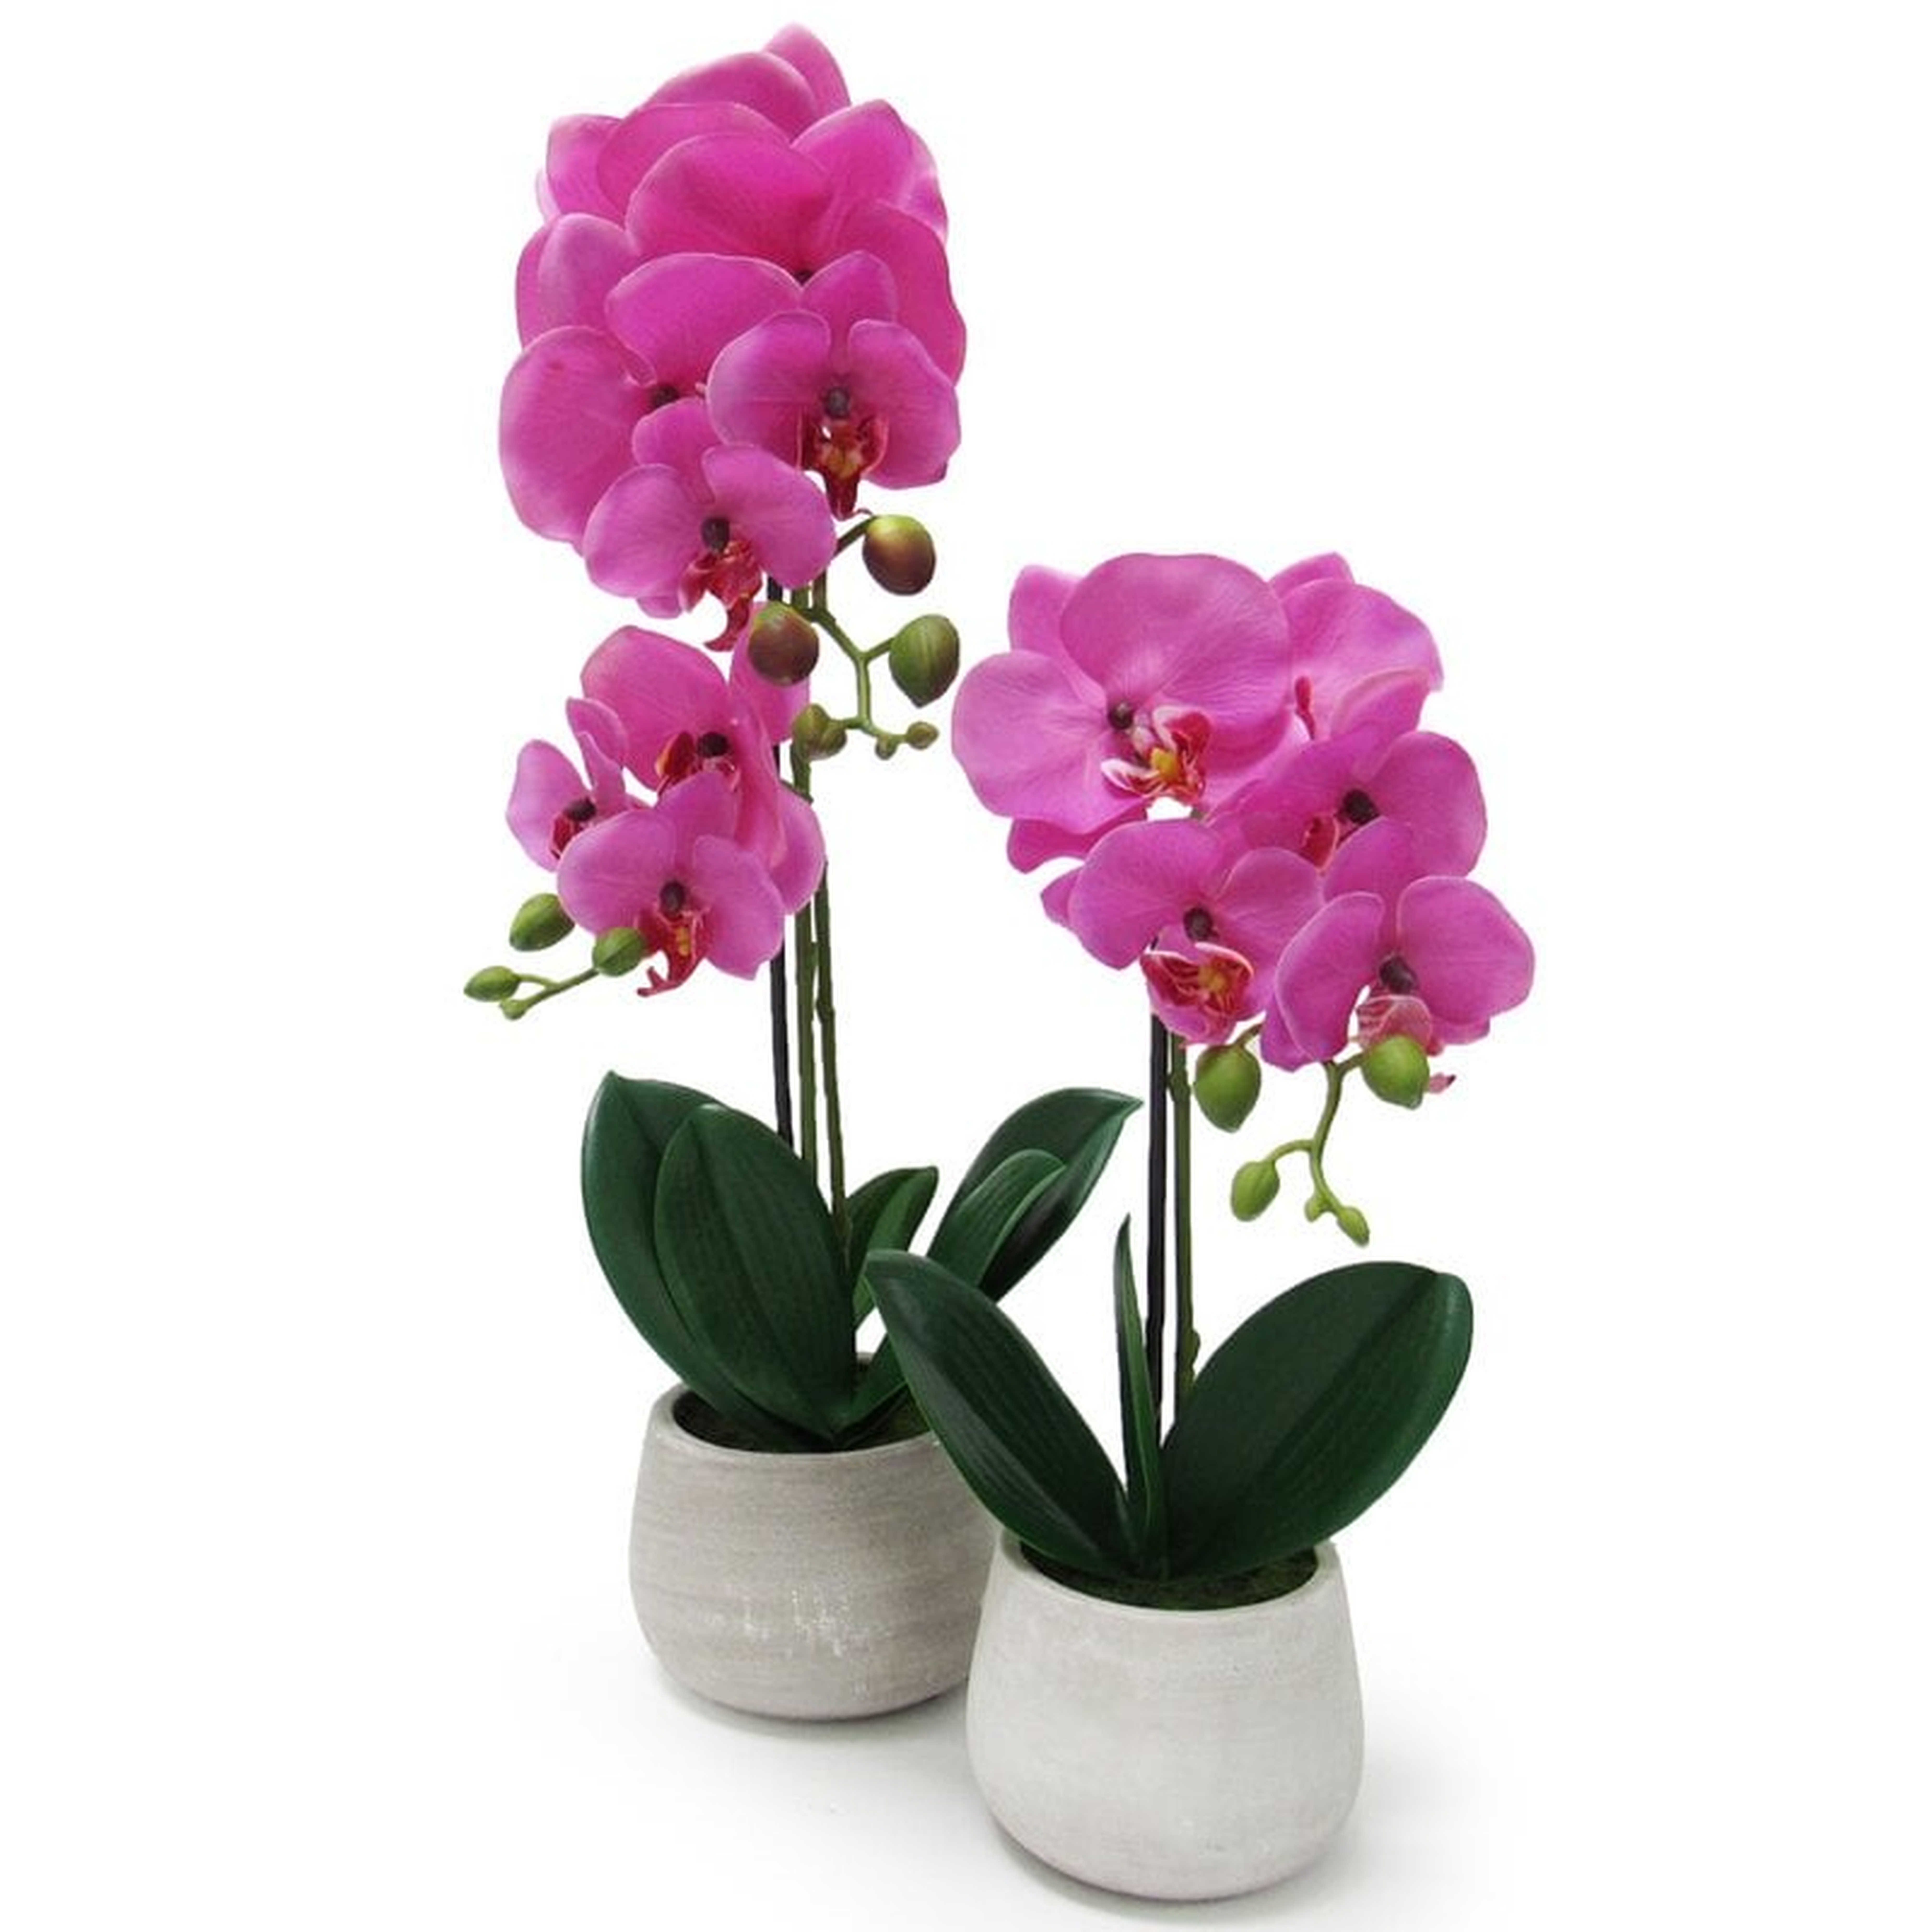 Phalaenopsis Orchids Arrangements in Pot - Wayfair